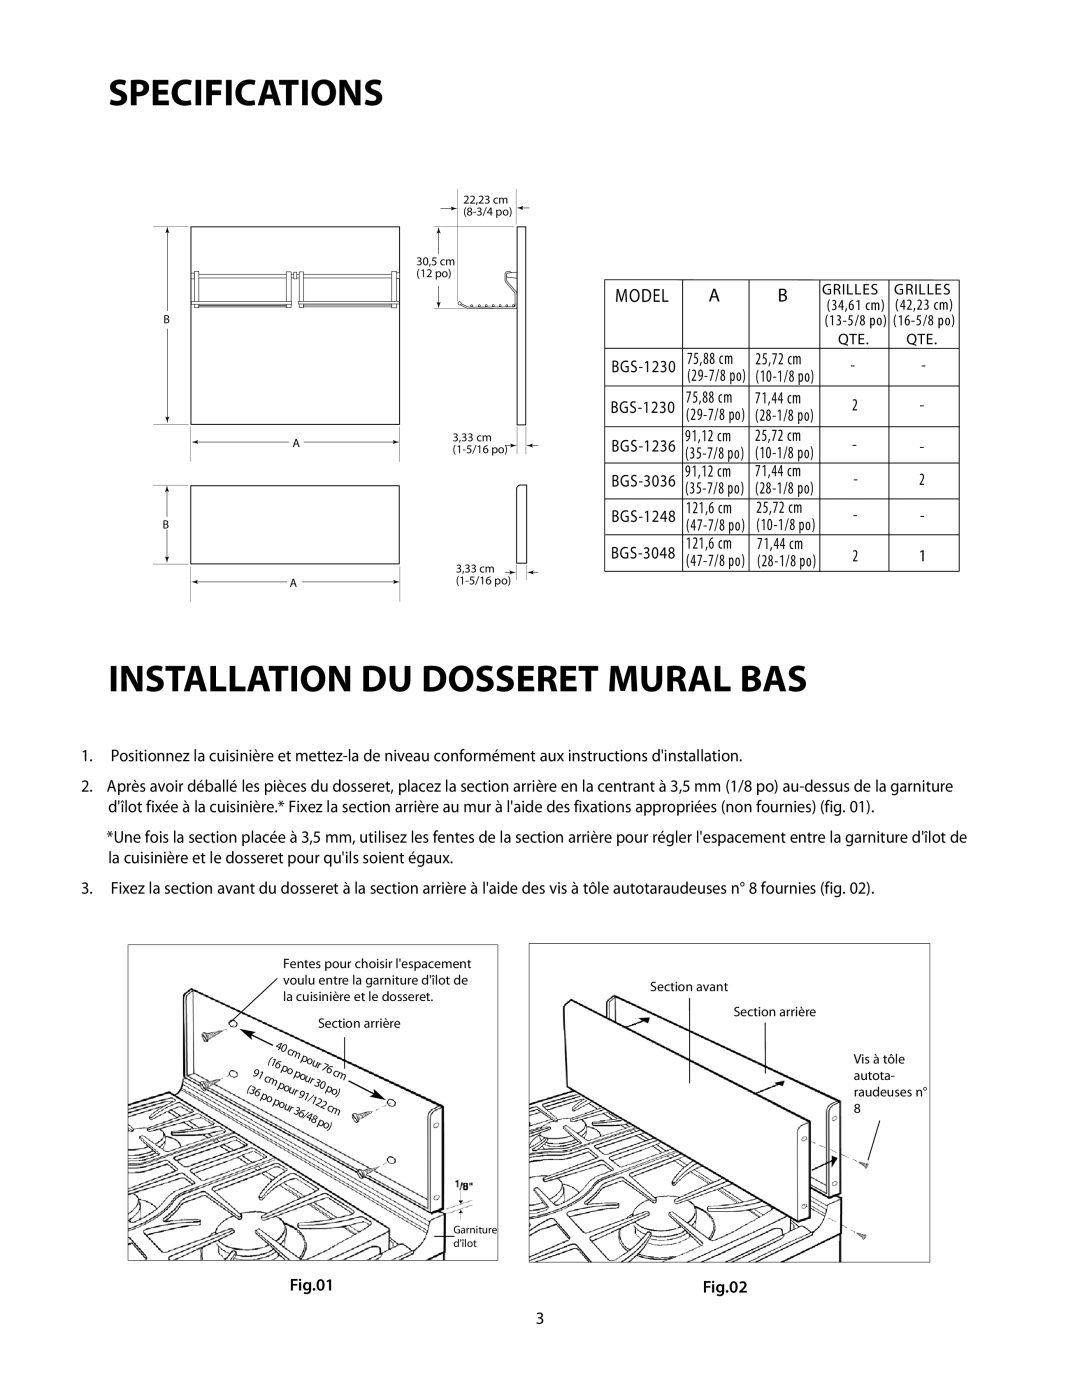 DCS BGS-3030, BGS-3048, BGS-3036, BGS-1230, BGS-1236, BGS-1248 manual Installation Du Dosseret Mural Bas, Specifications, Model 